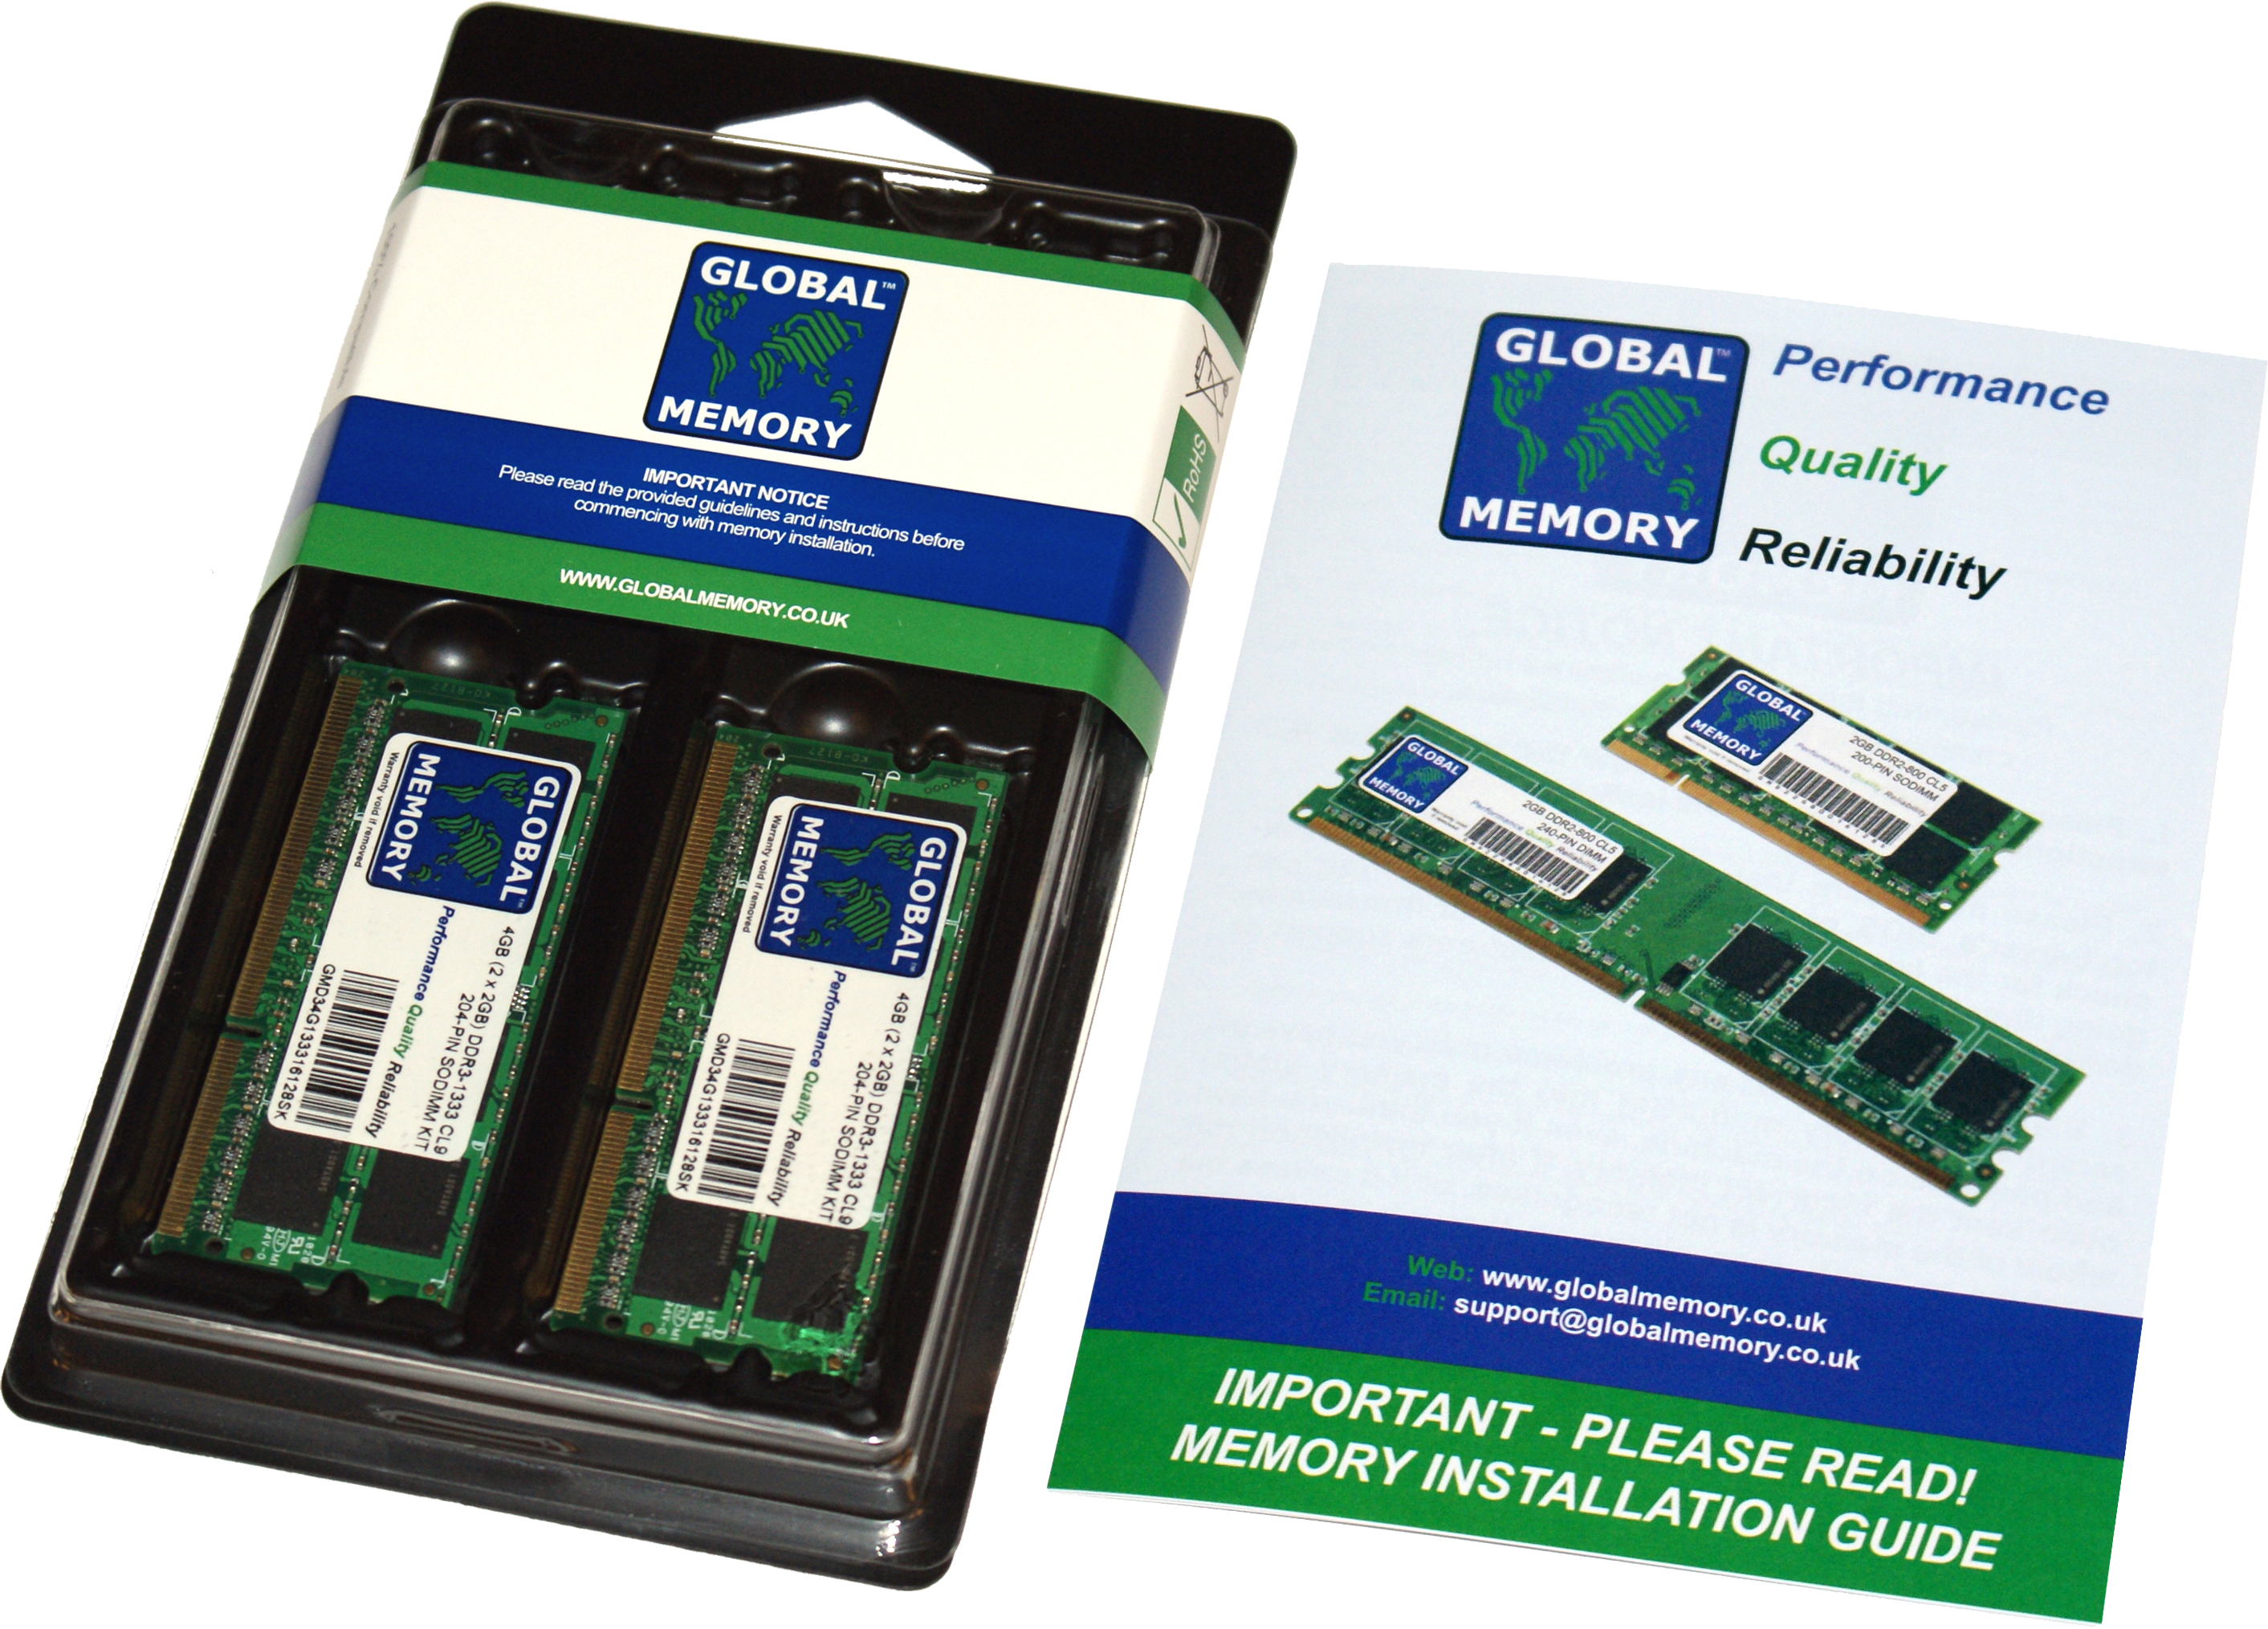 8GB (2 x 4GB) DDR3 1866MHz PC3-12800 204-PIN SODIMM MEMORY RAM KIT FOR INTEL IMAC RETINA 5K 27 INCH (LATE 2015)